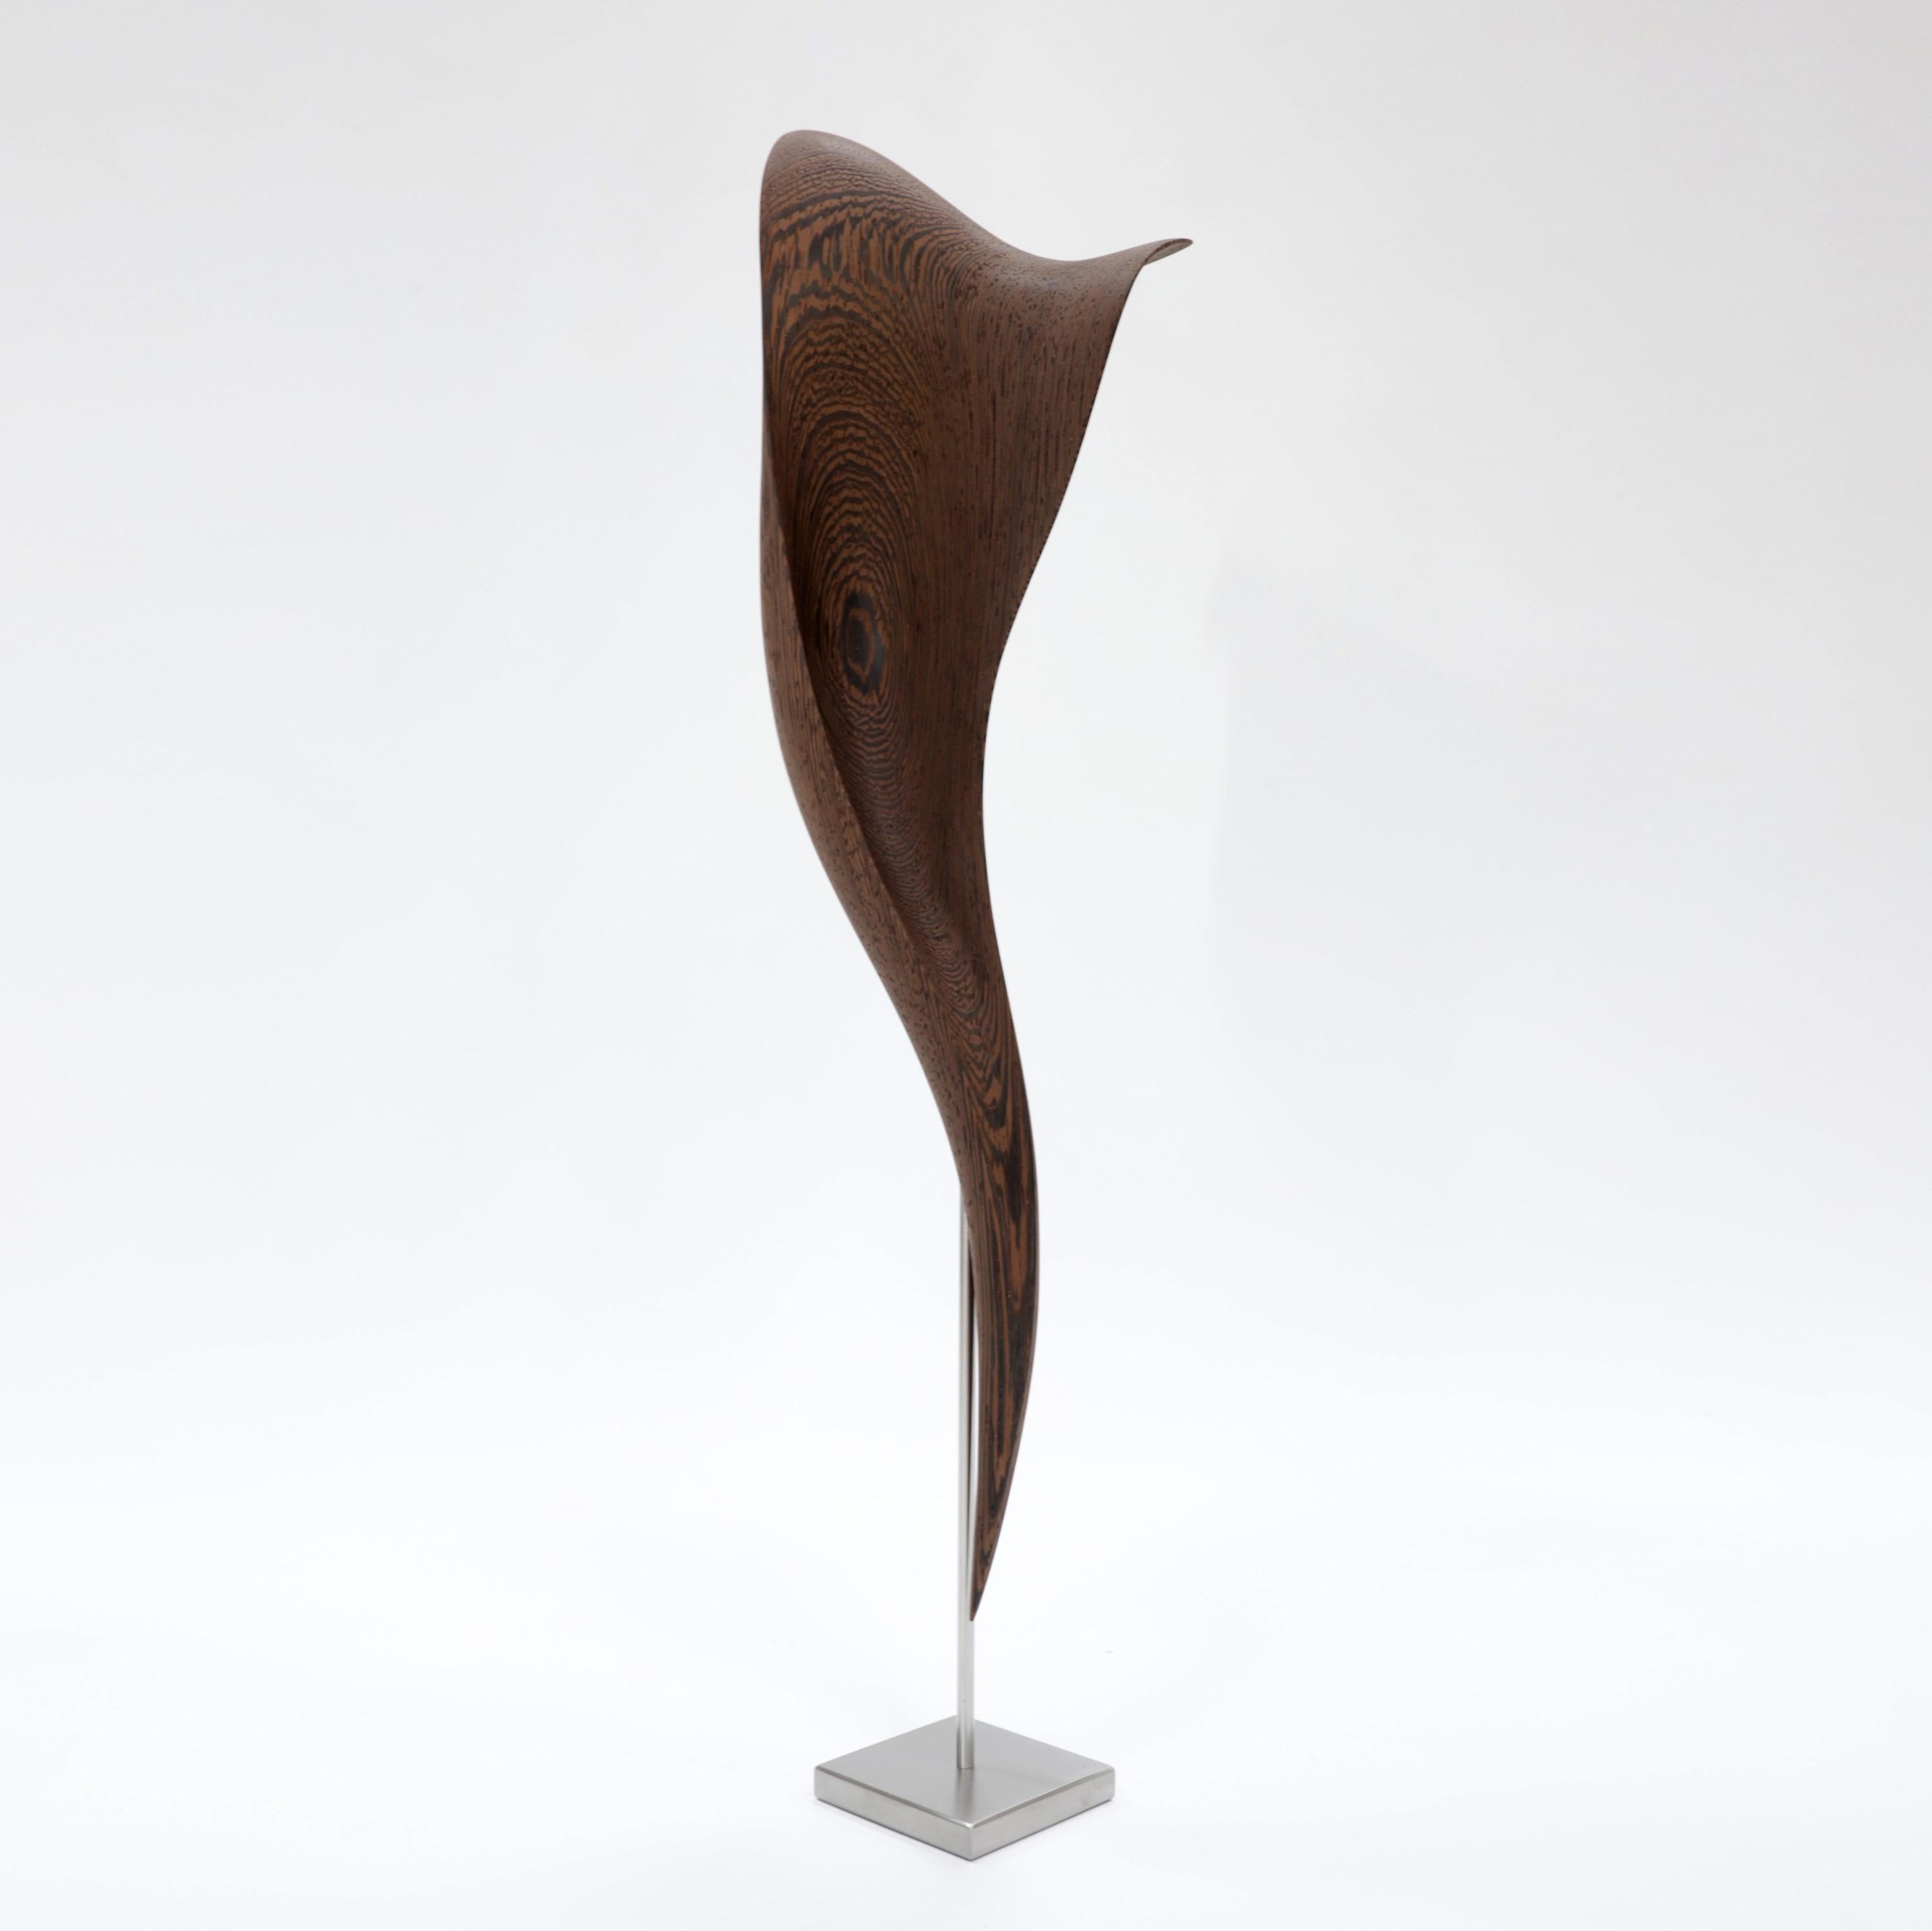 Flow Petit No 3, an Abstract Wooden Sculpture by the Danish Studio Egeværk 2